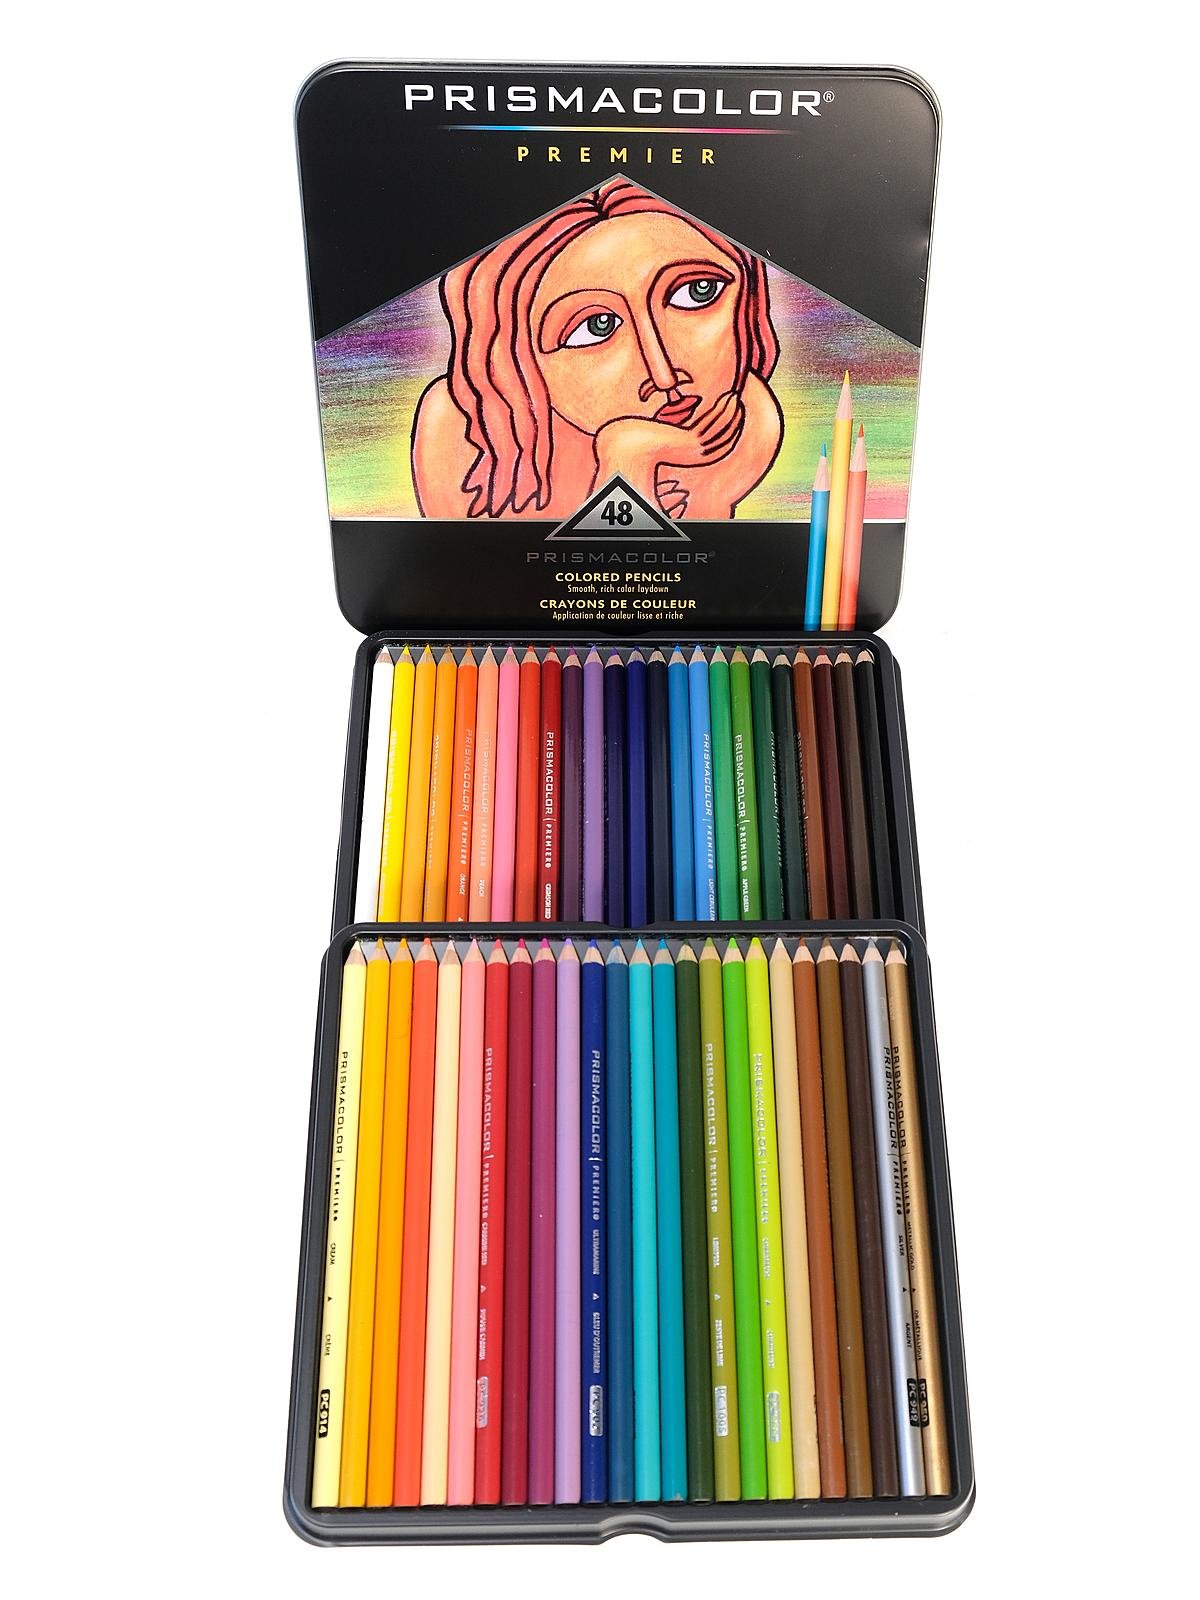 48 Piece Metallic Colored Pencil Set in Display Tin